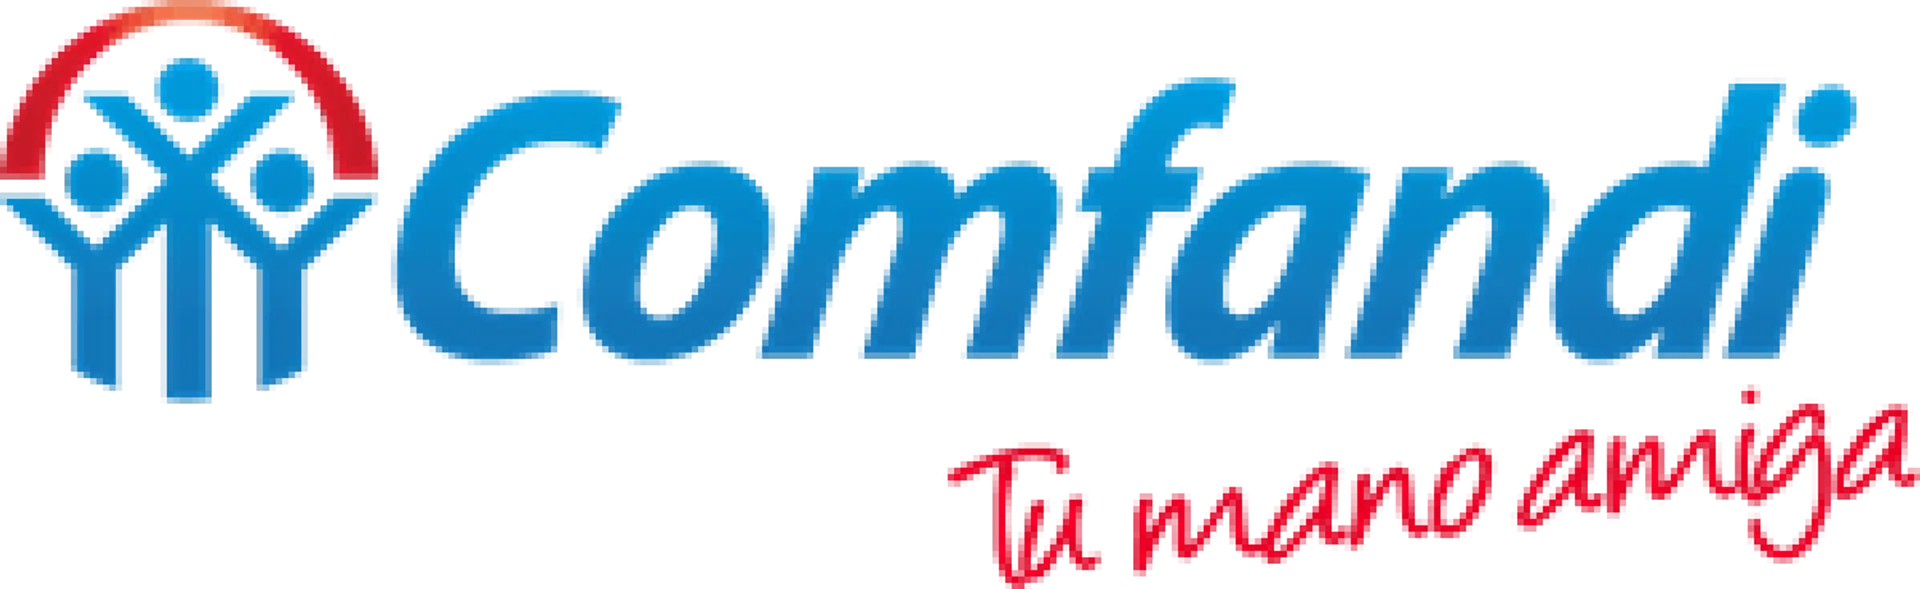 COMFANDI logo de catálogo